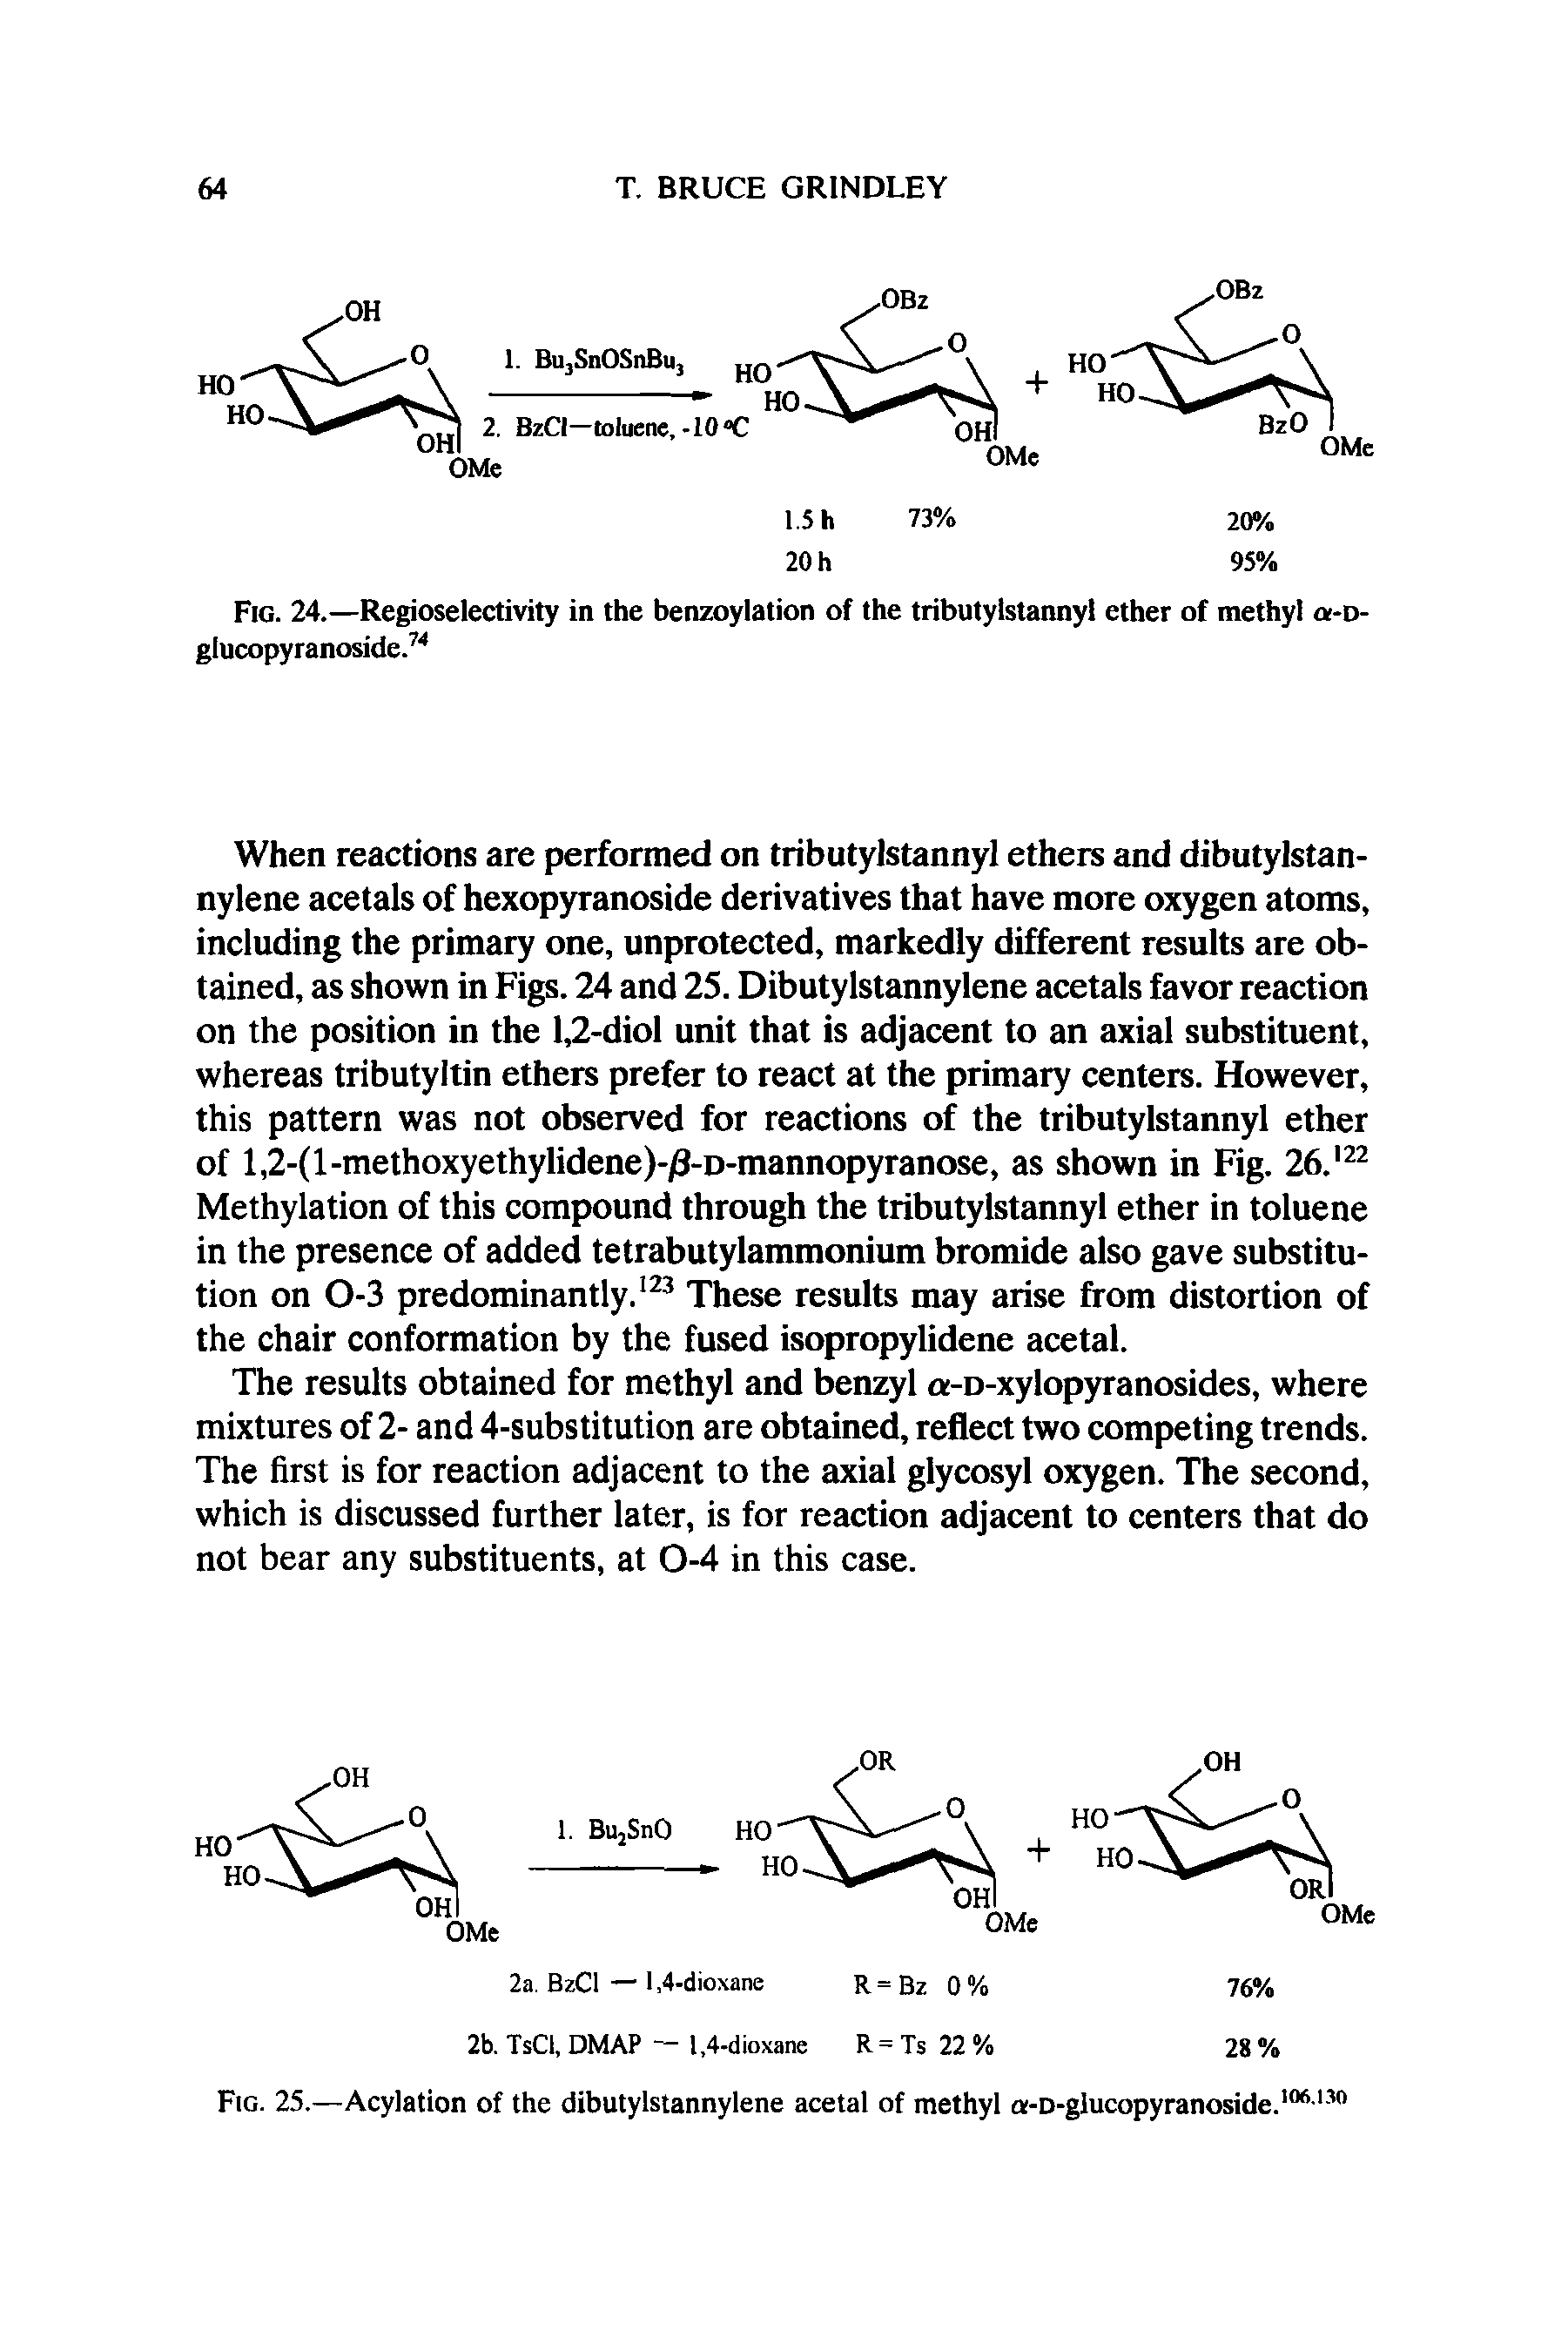 Fig. 24.—Regioselectivity in the benzoylation of the tributylstannyl ether of methyl a-o-glucopyranoside.74...